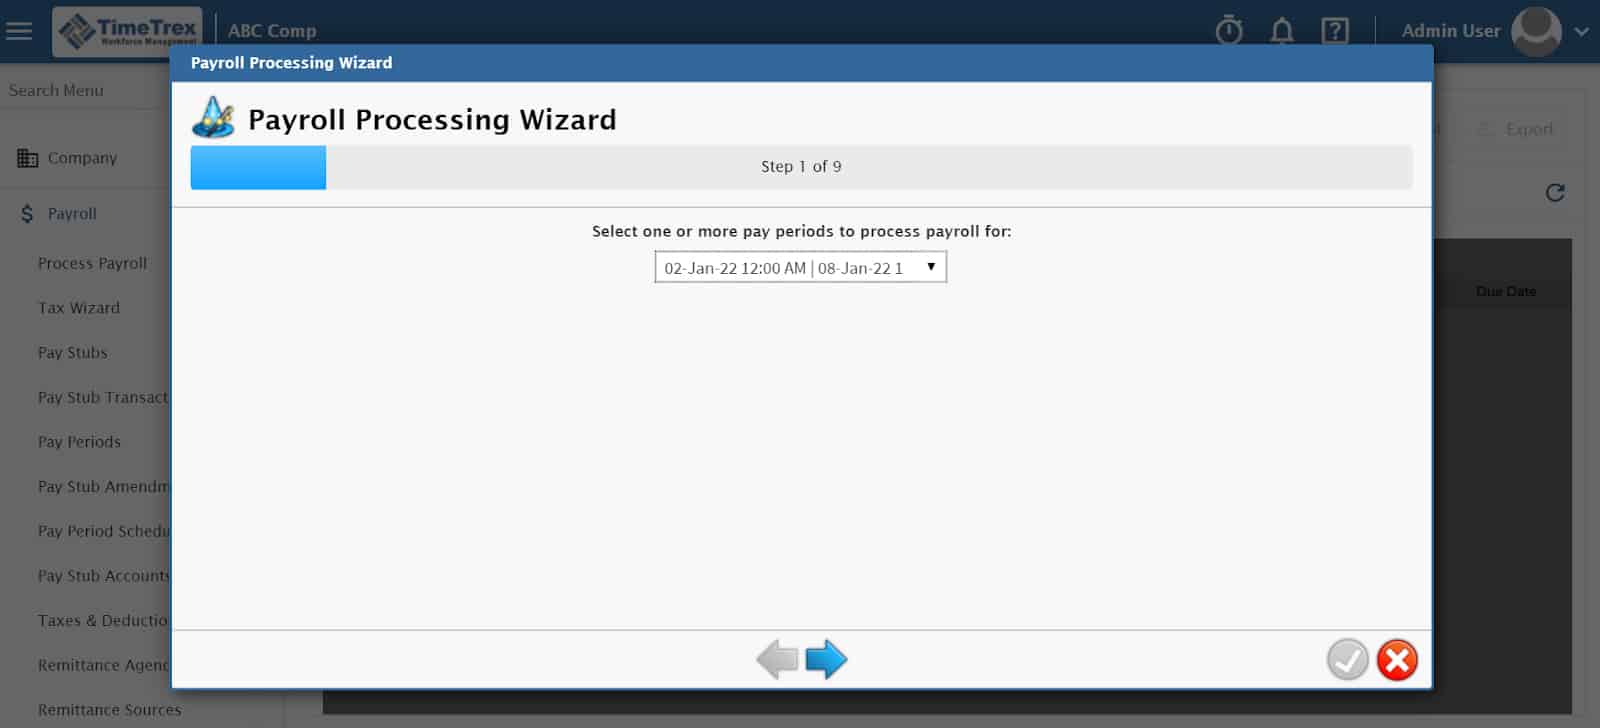 TimeTrex Payroll Processing Wizard step 1 of 9.